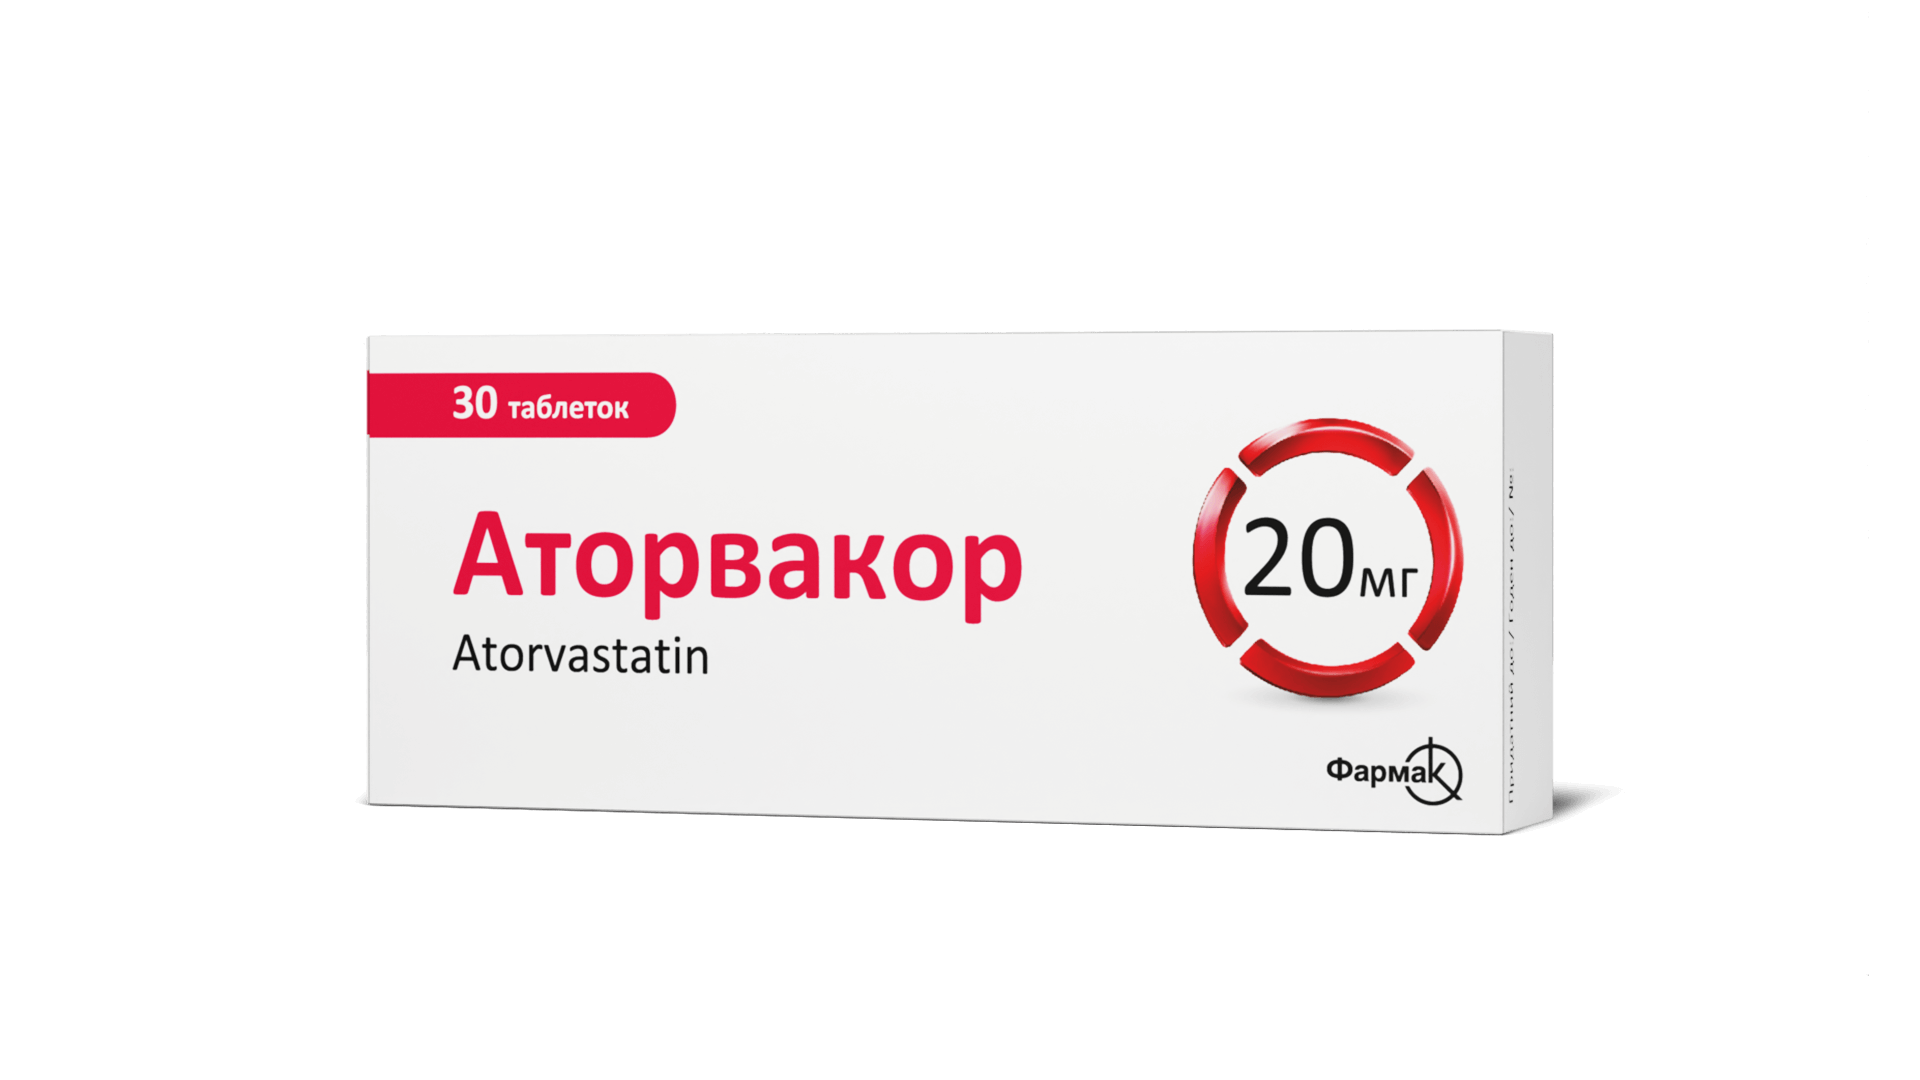 Аторвакор® 20 мг (3)